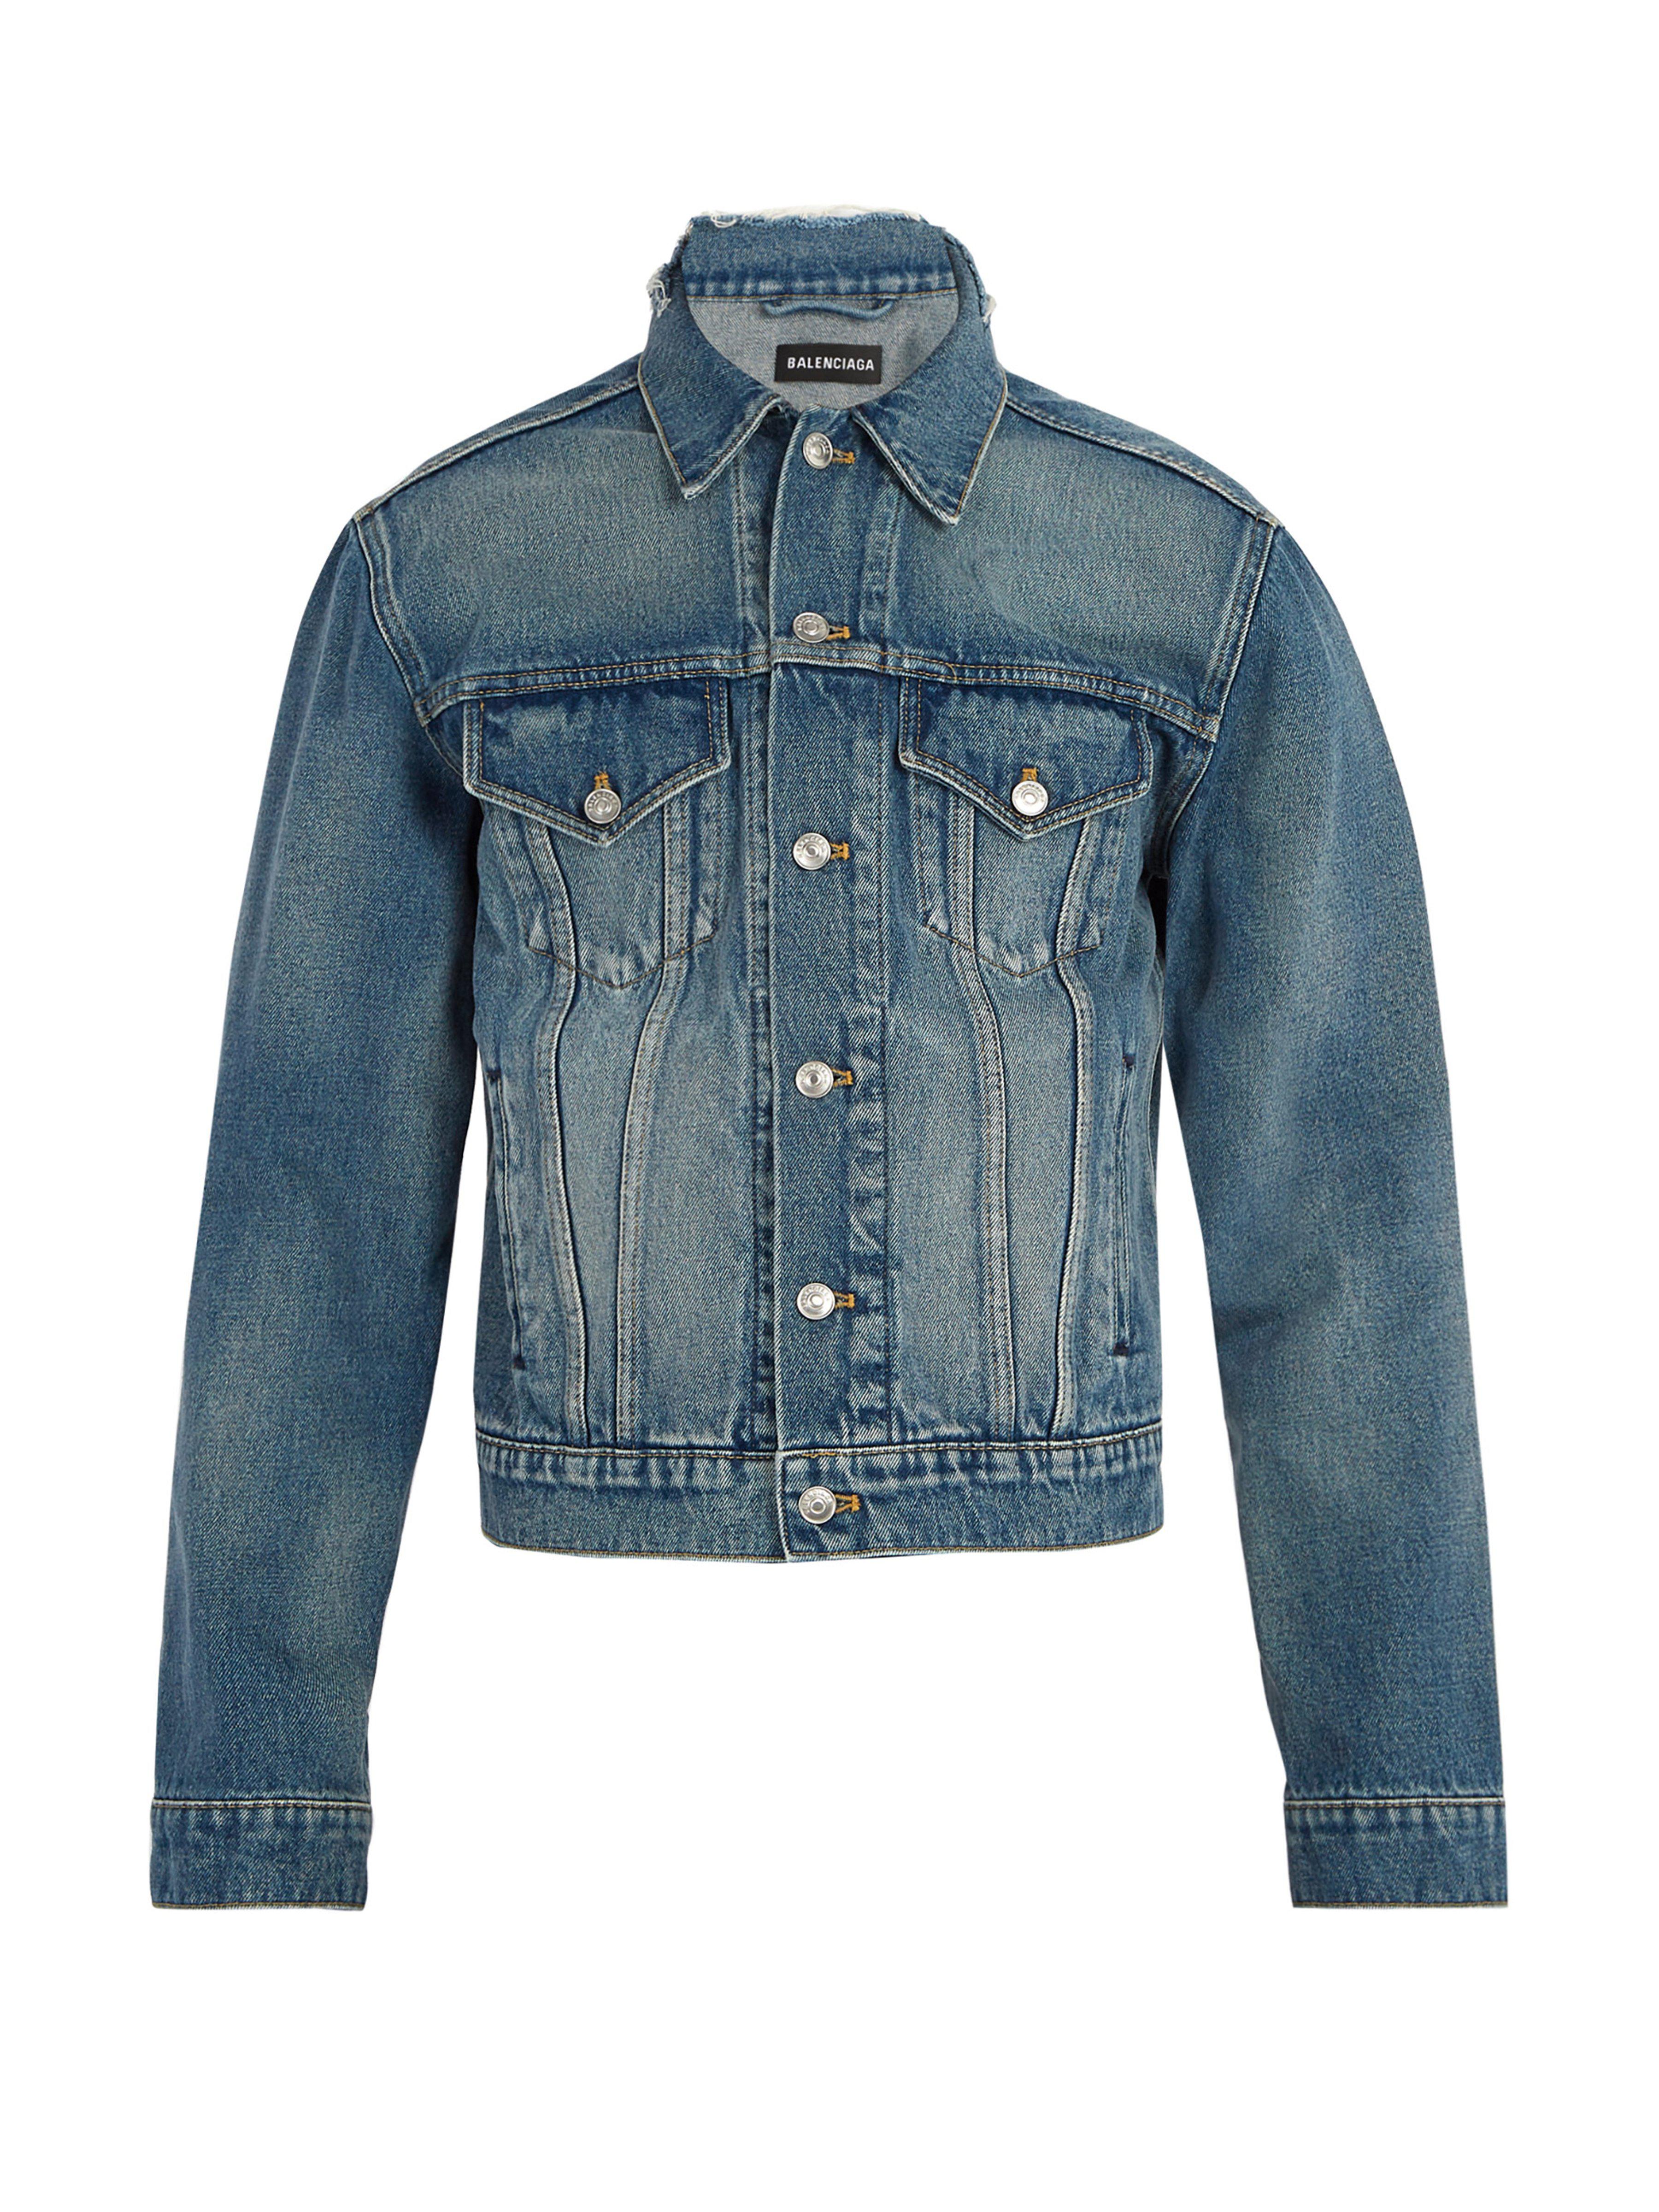 Balenciaga Slim Fit Logo Embroidered Denim Jacket in Blue for Men - Lyst